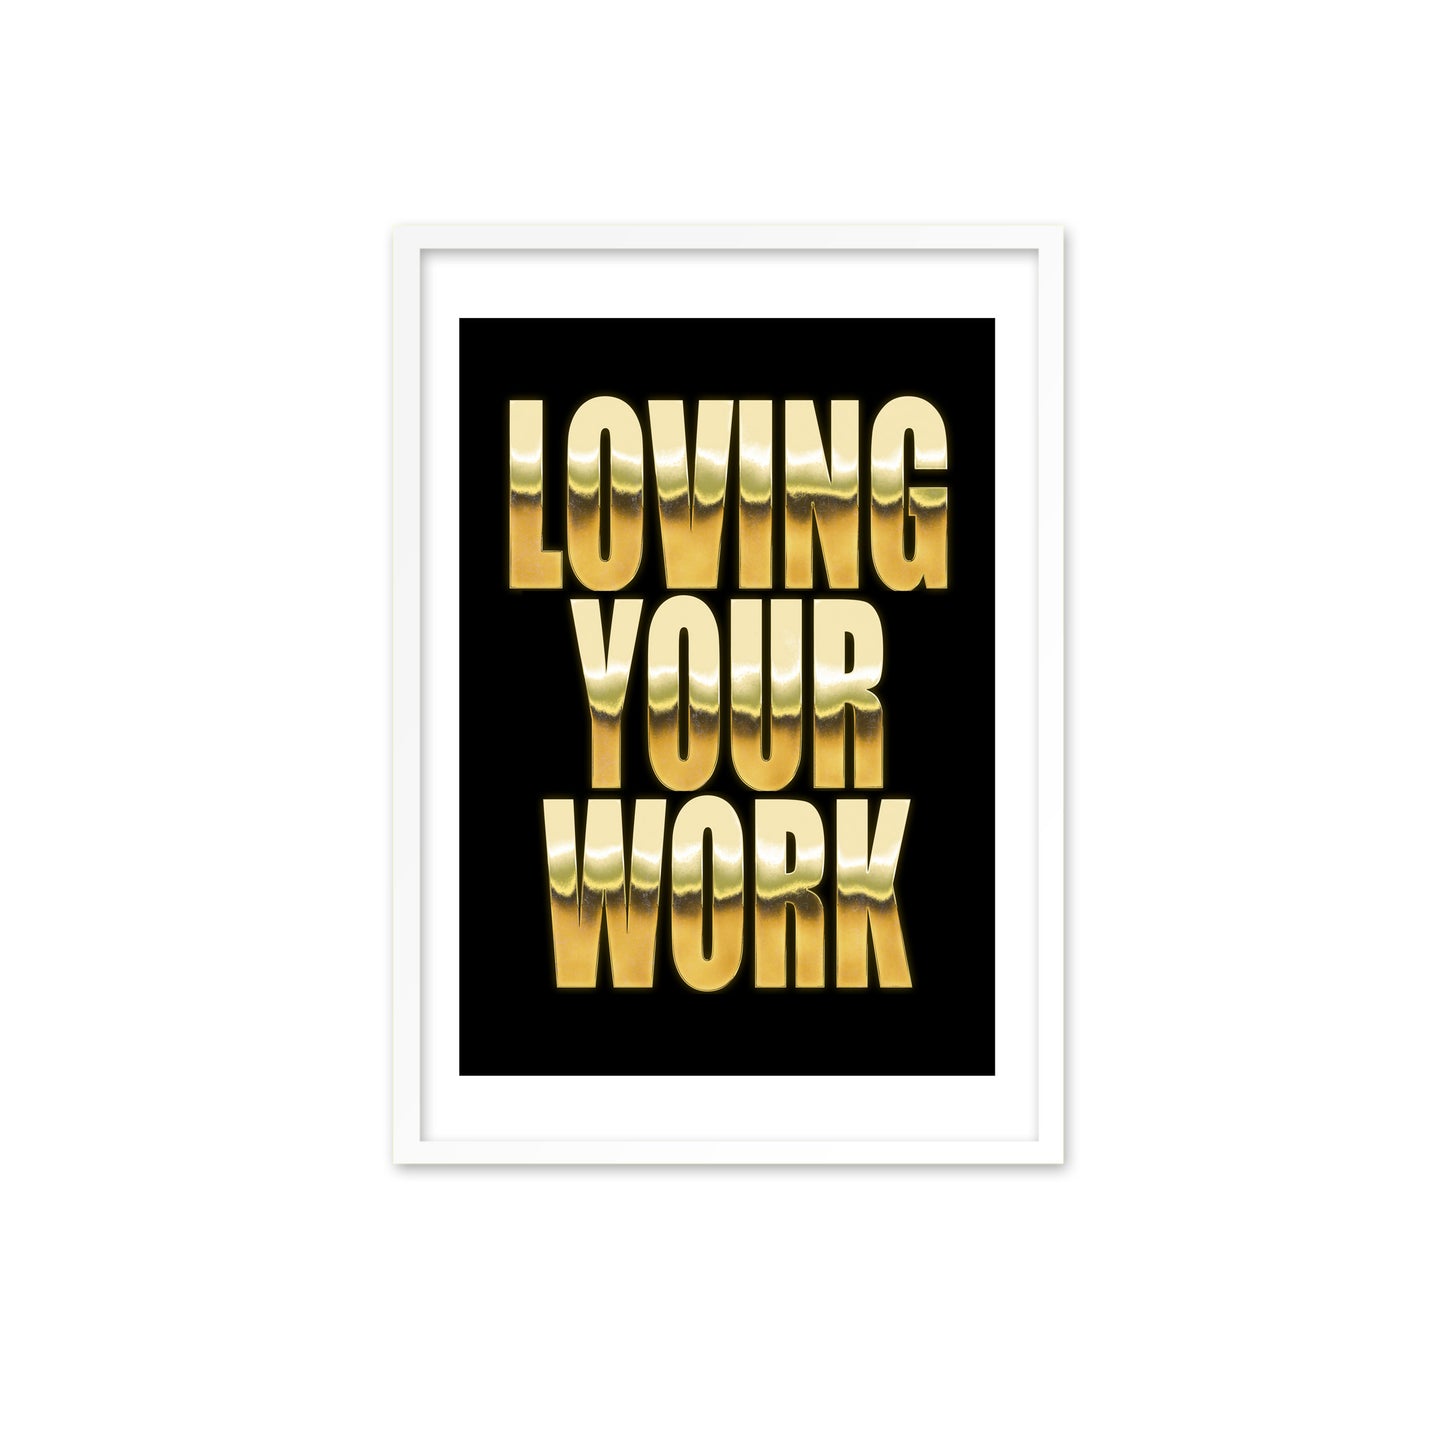 Loving Your Work - Gold foil effect on black print